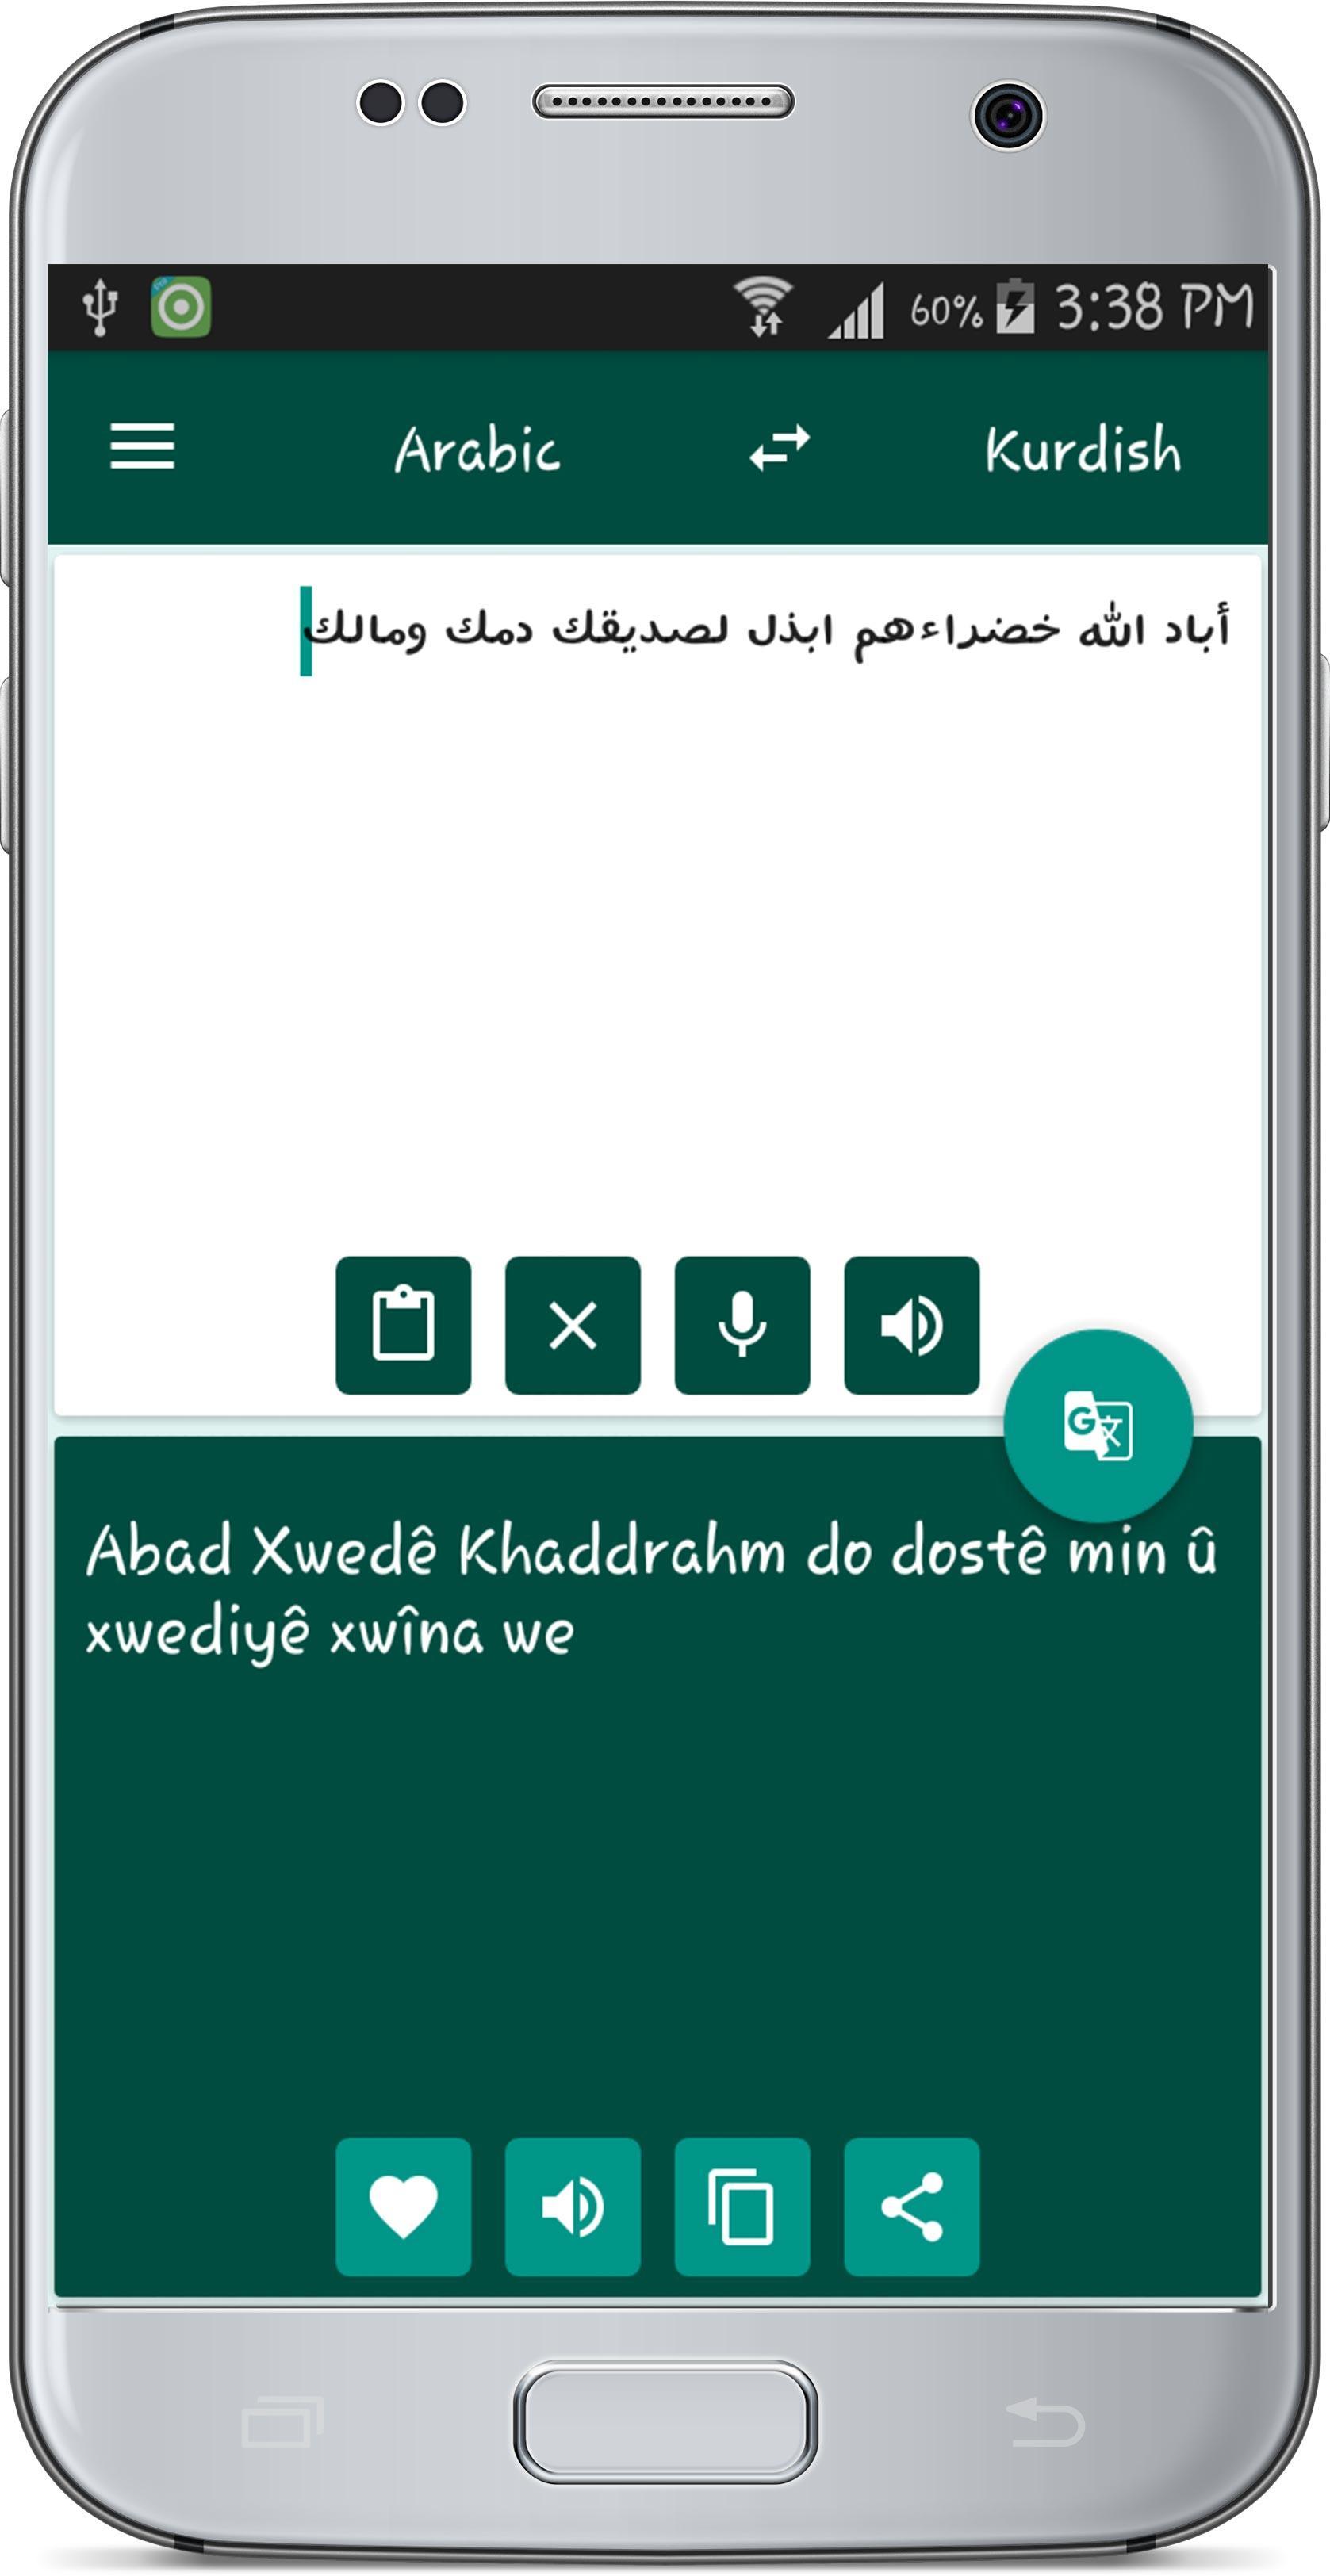 Kurdish Arabic Translate APK for Android Download